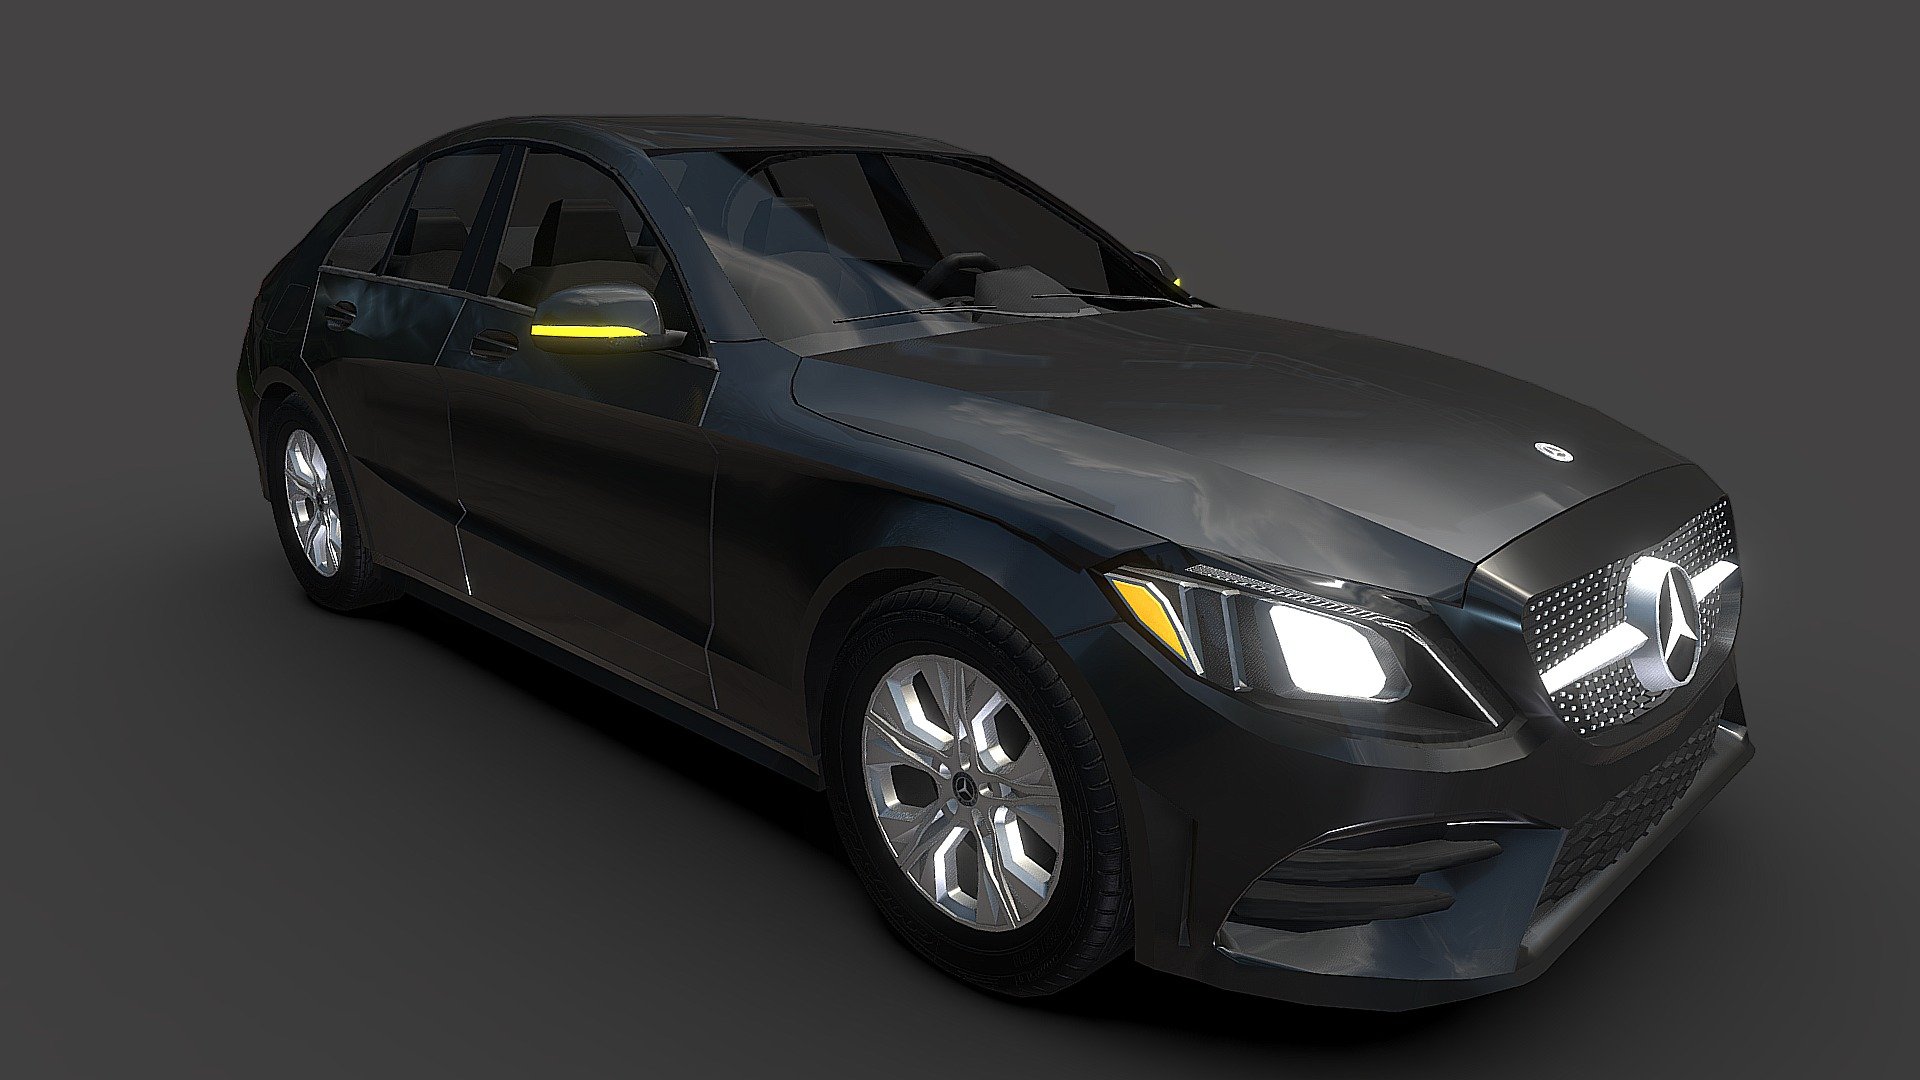 low poly 3d model
client: eli eningenburg 3d
model texture and shading by julian estrada - Mercedes Benz C Class 2020 - Buy Royalty Free 3D model by juliancad 3d model